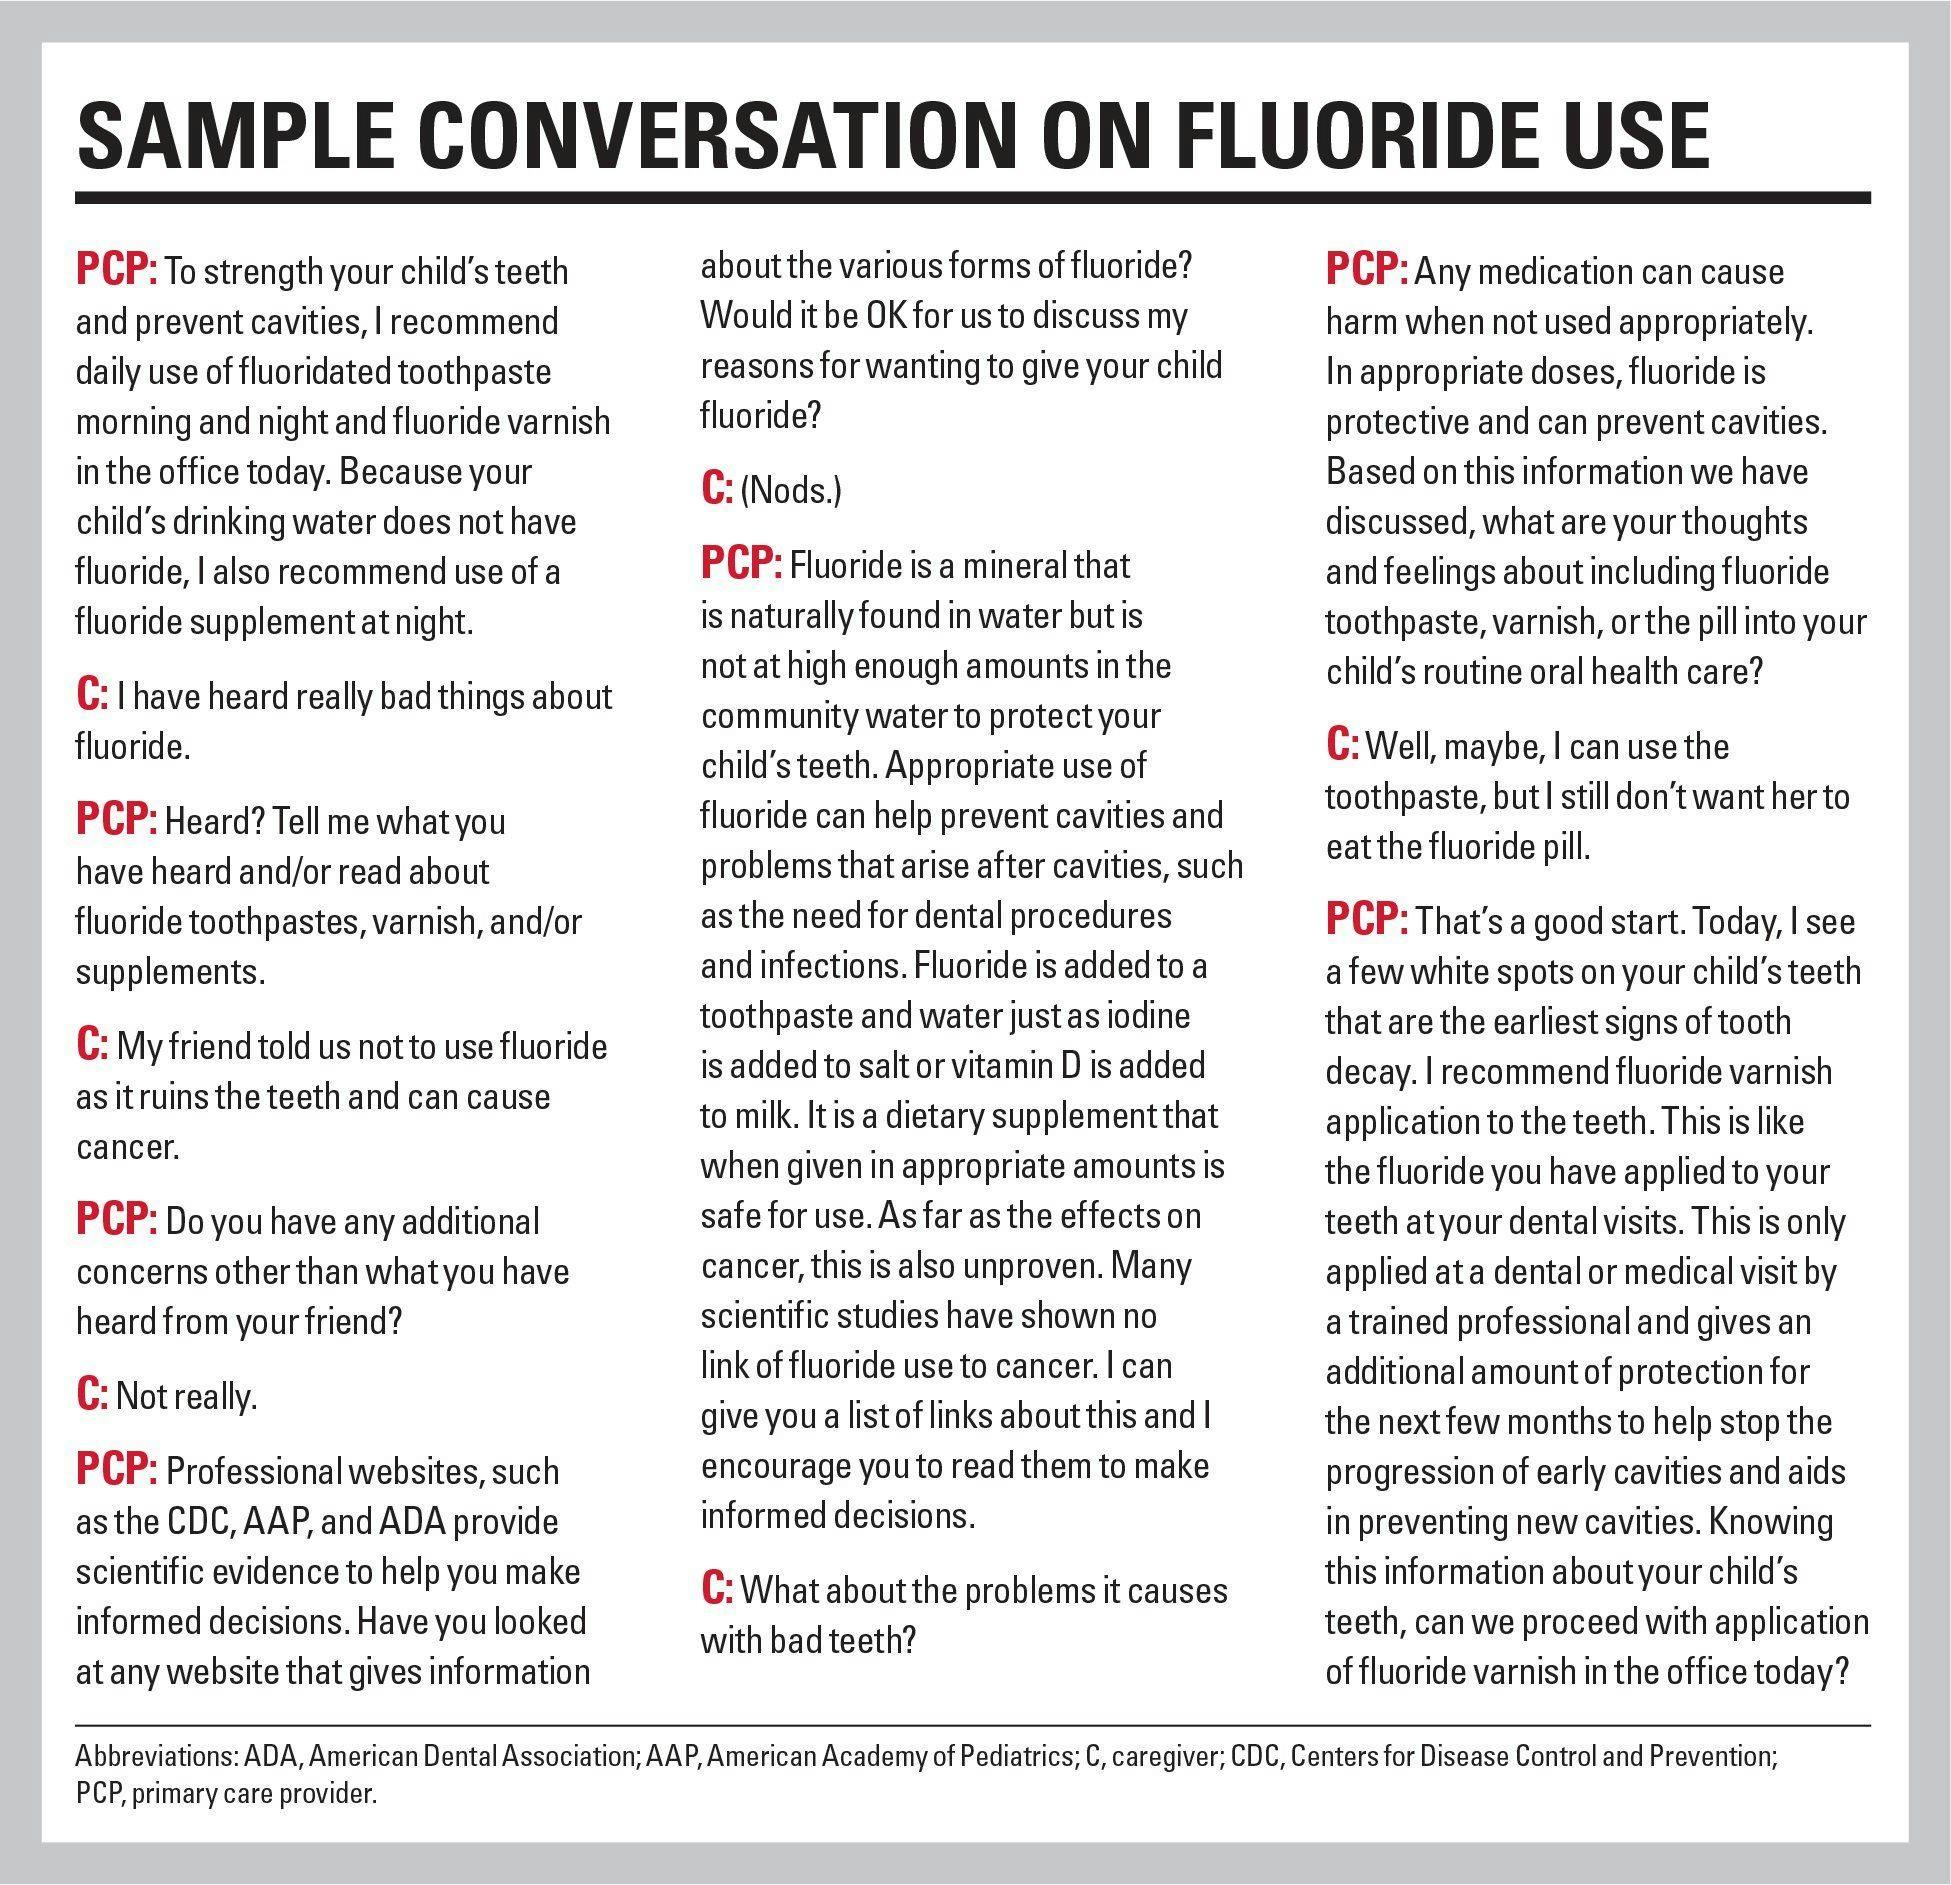 Sample conversation on fluoride use